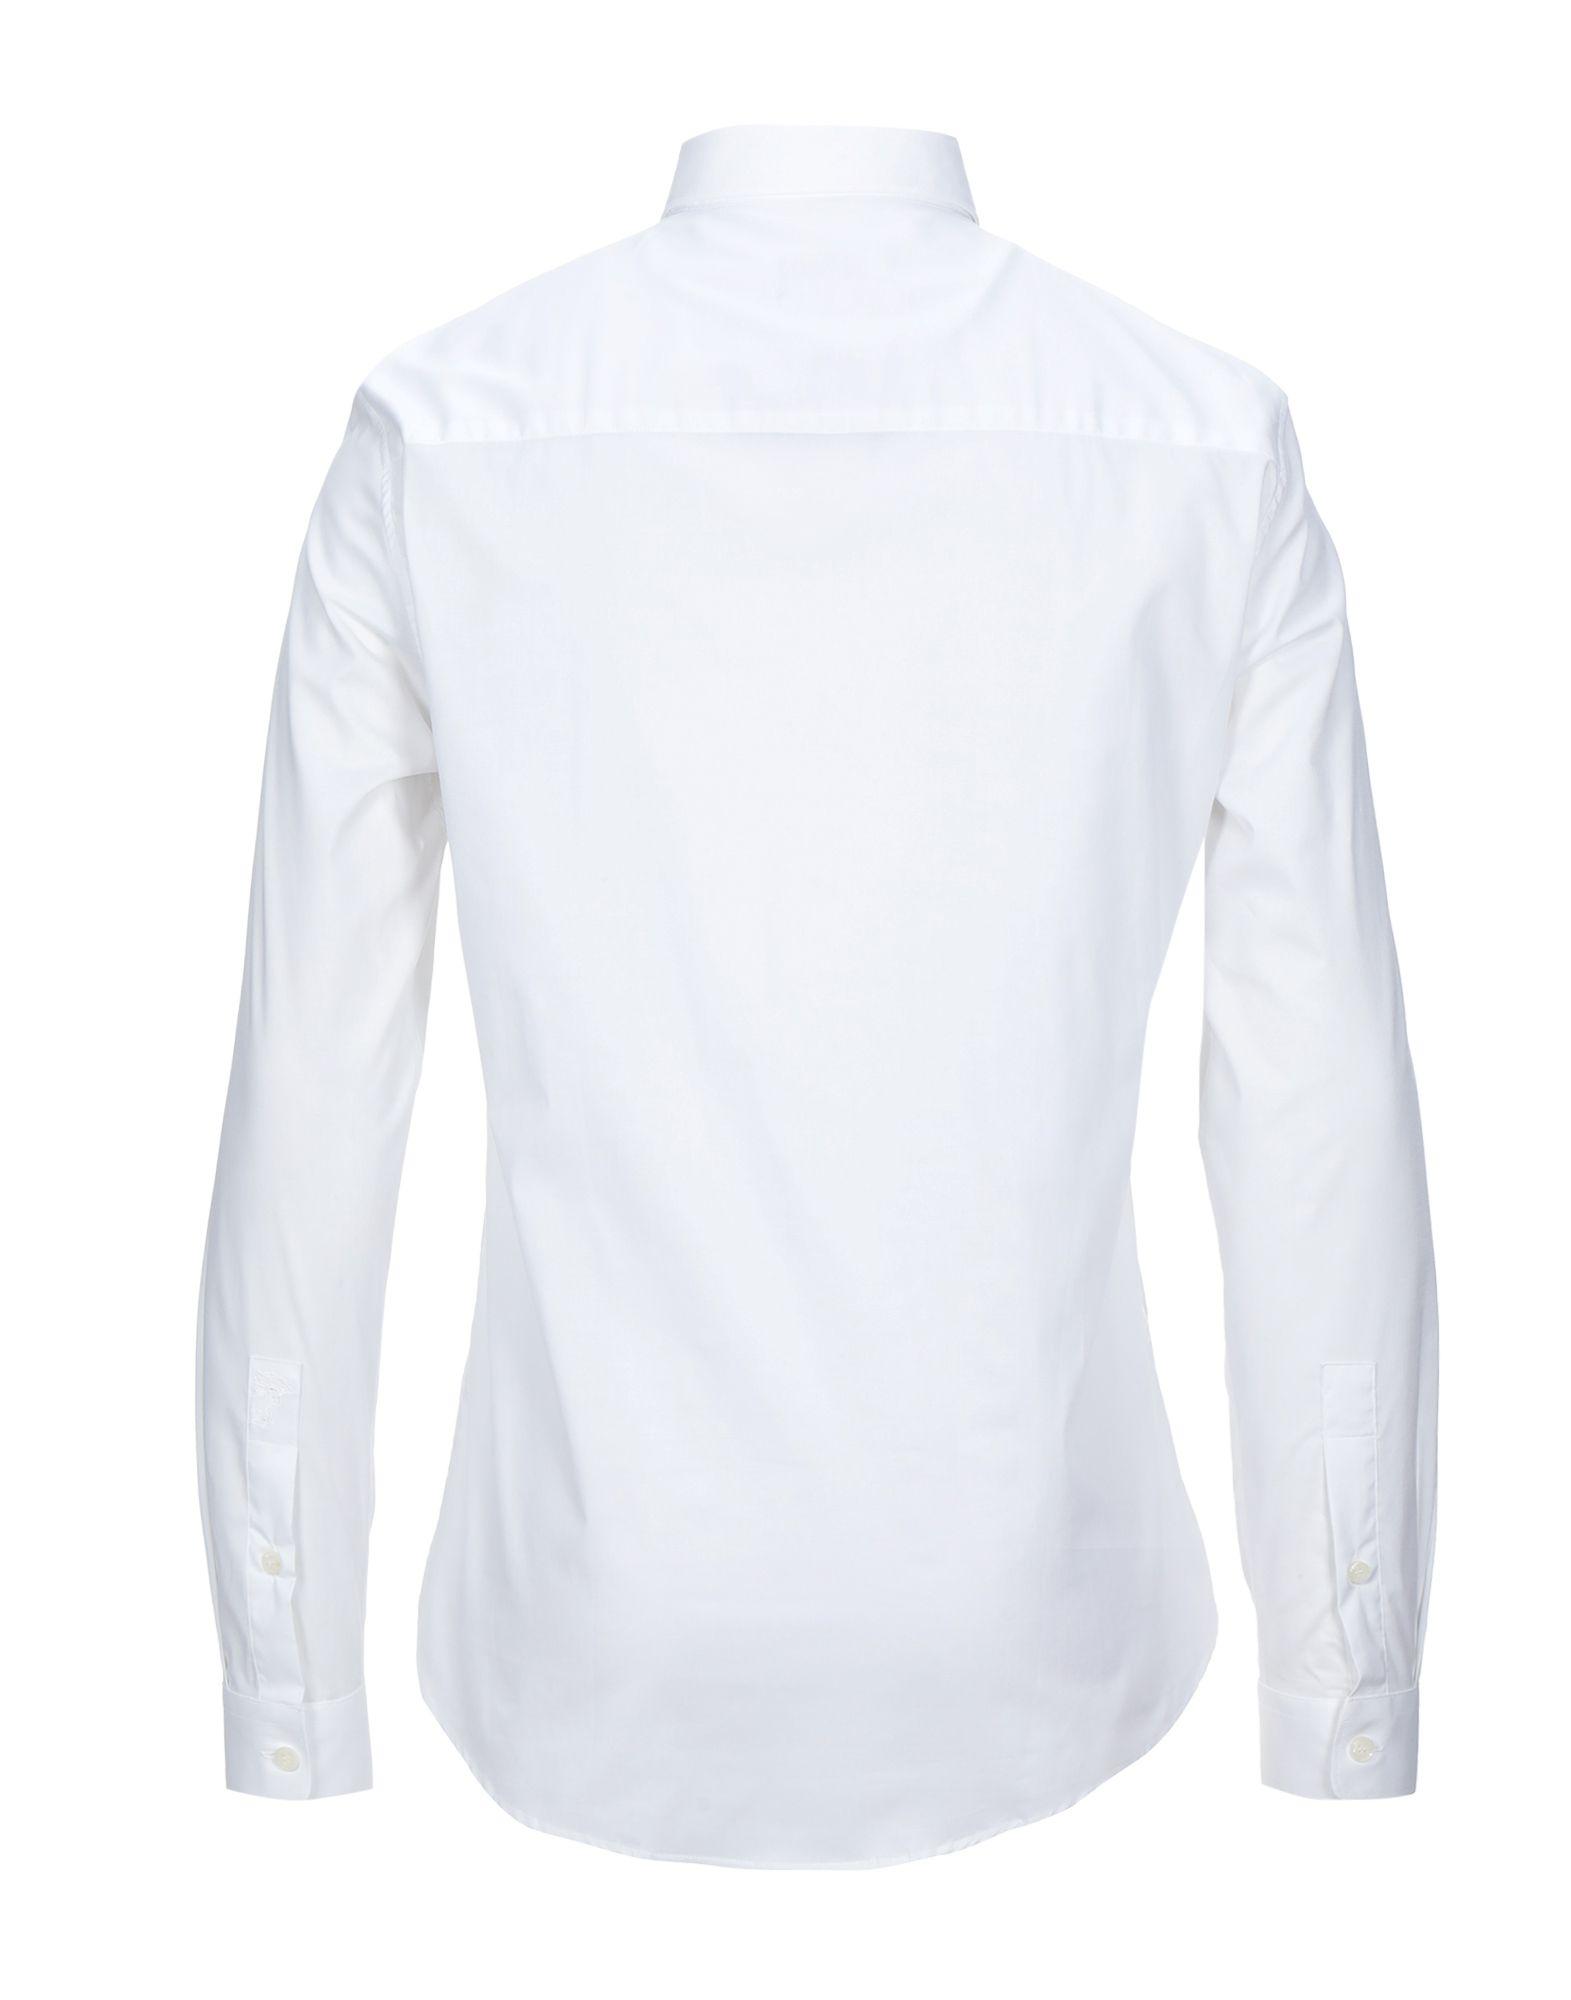 Versace Shirt in White for Men - Lyst